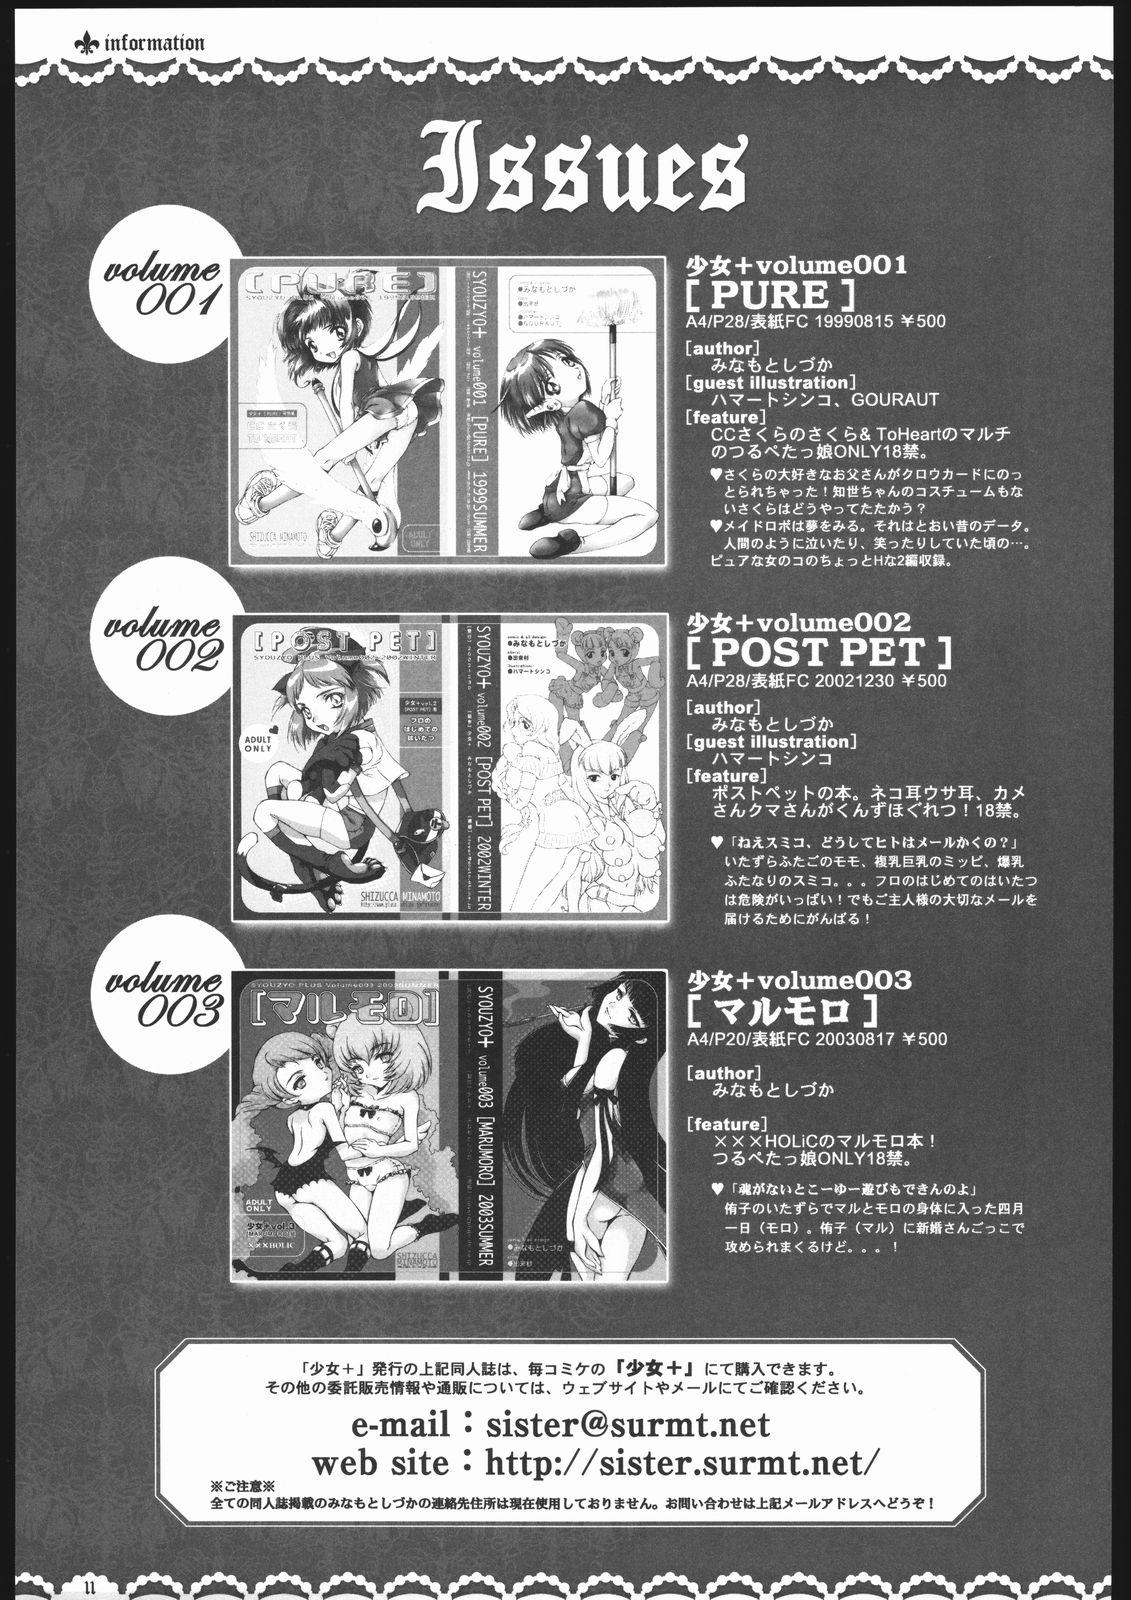 Hot Pussy Syouzyo Plus Volume 004 2005 Summer - Tsubasa reservoir chronicle Cop - Page 10